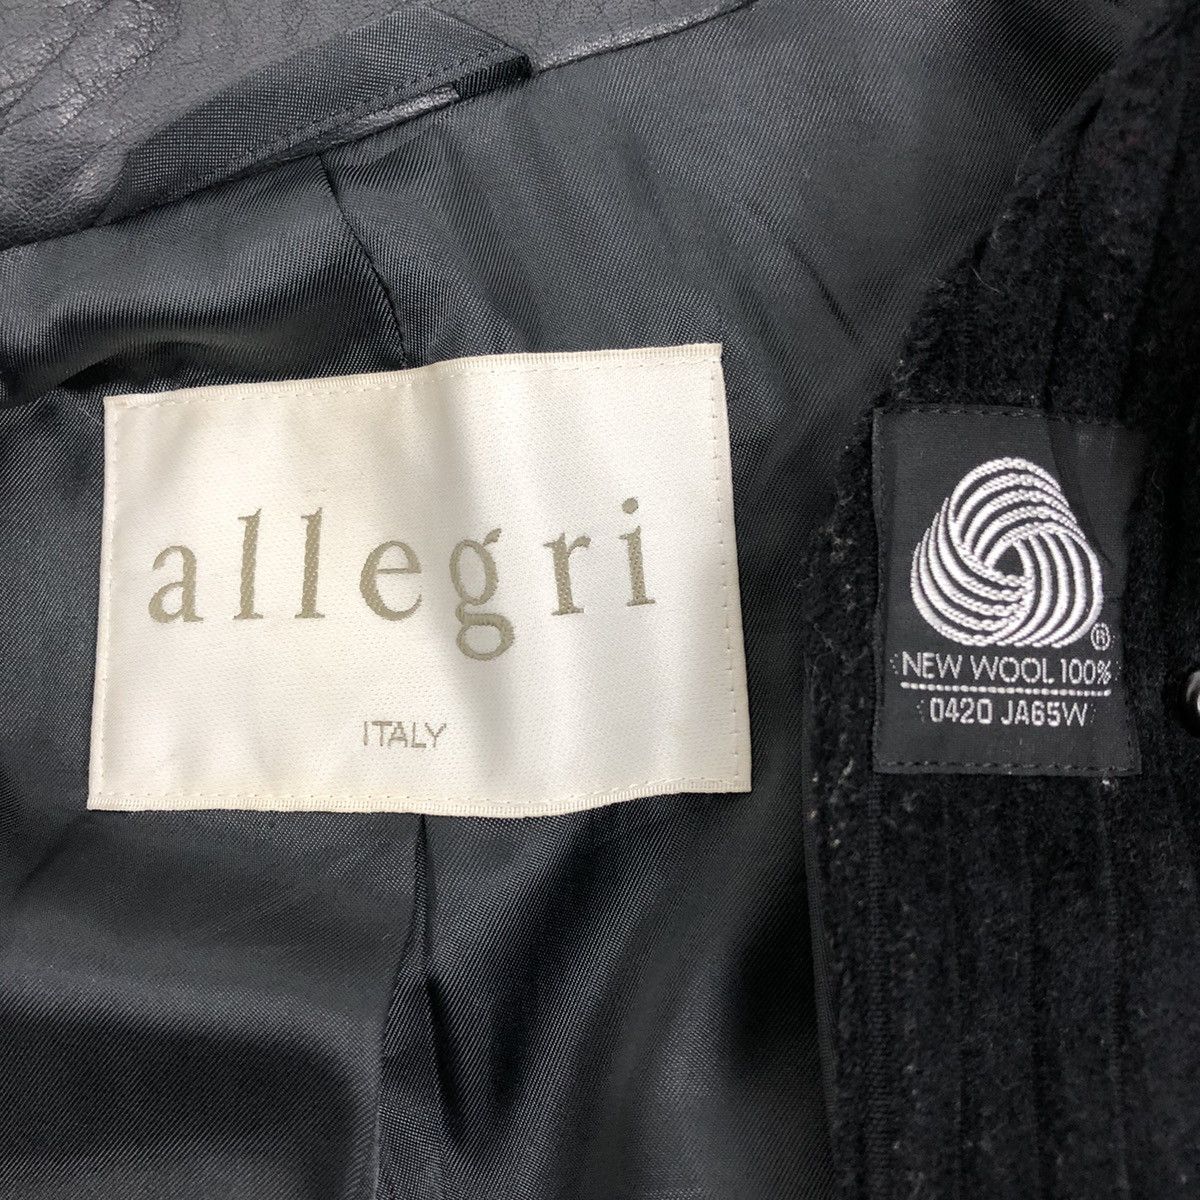 Vintage Allergri Italy Wool Coat Jacket Size L - 8